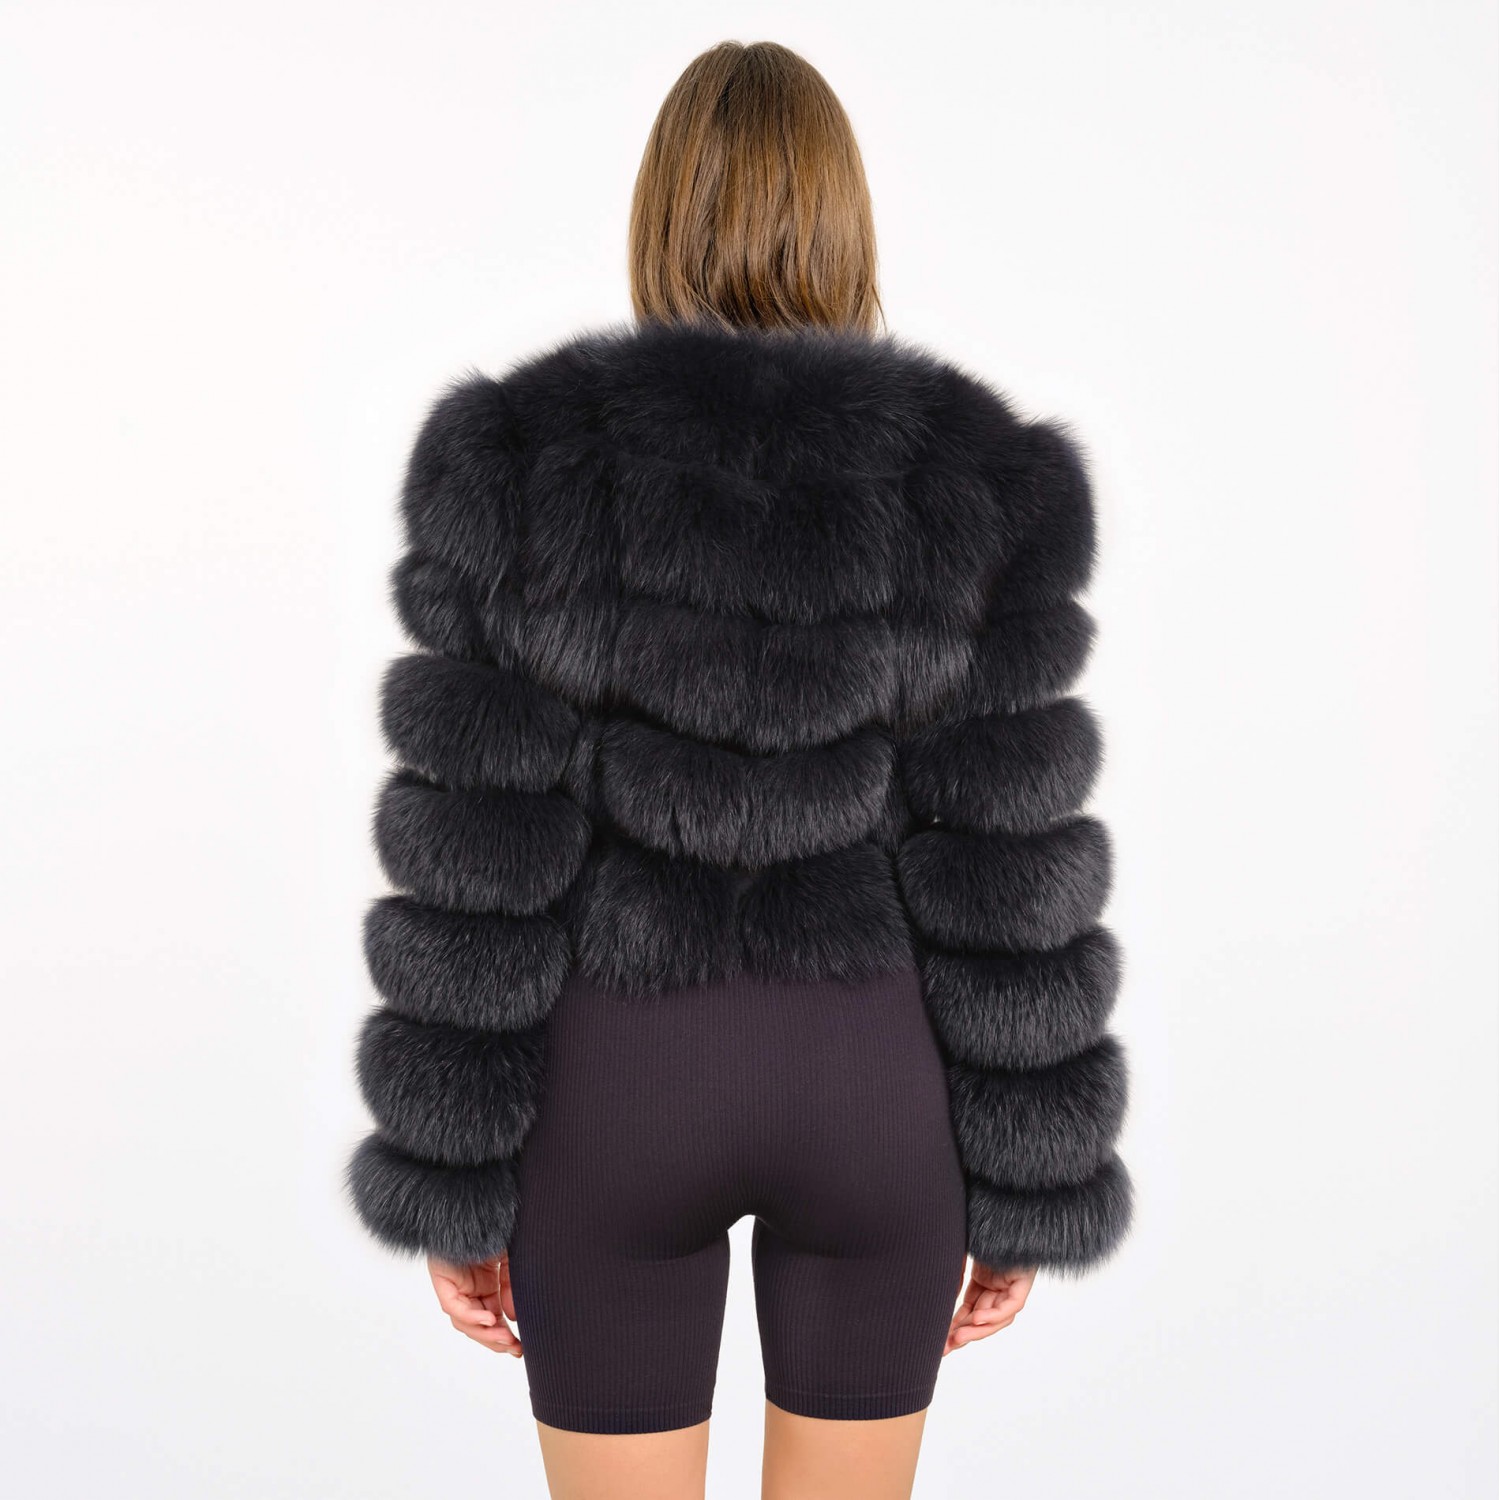 Cropped black fur jacket